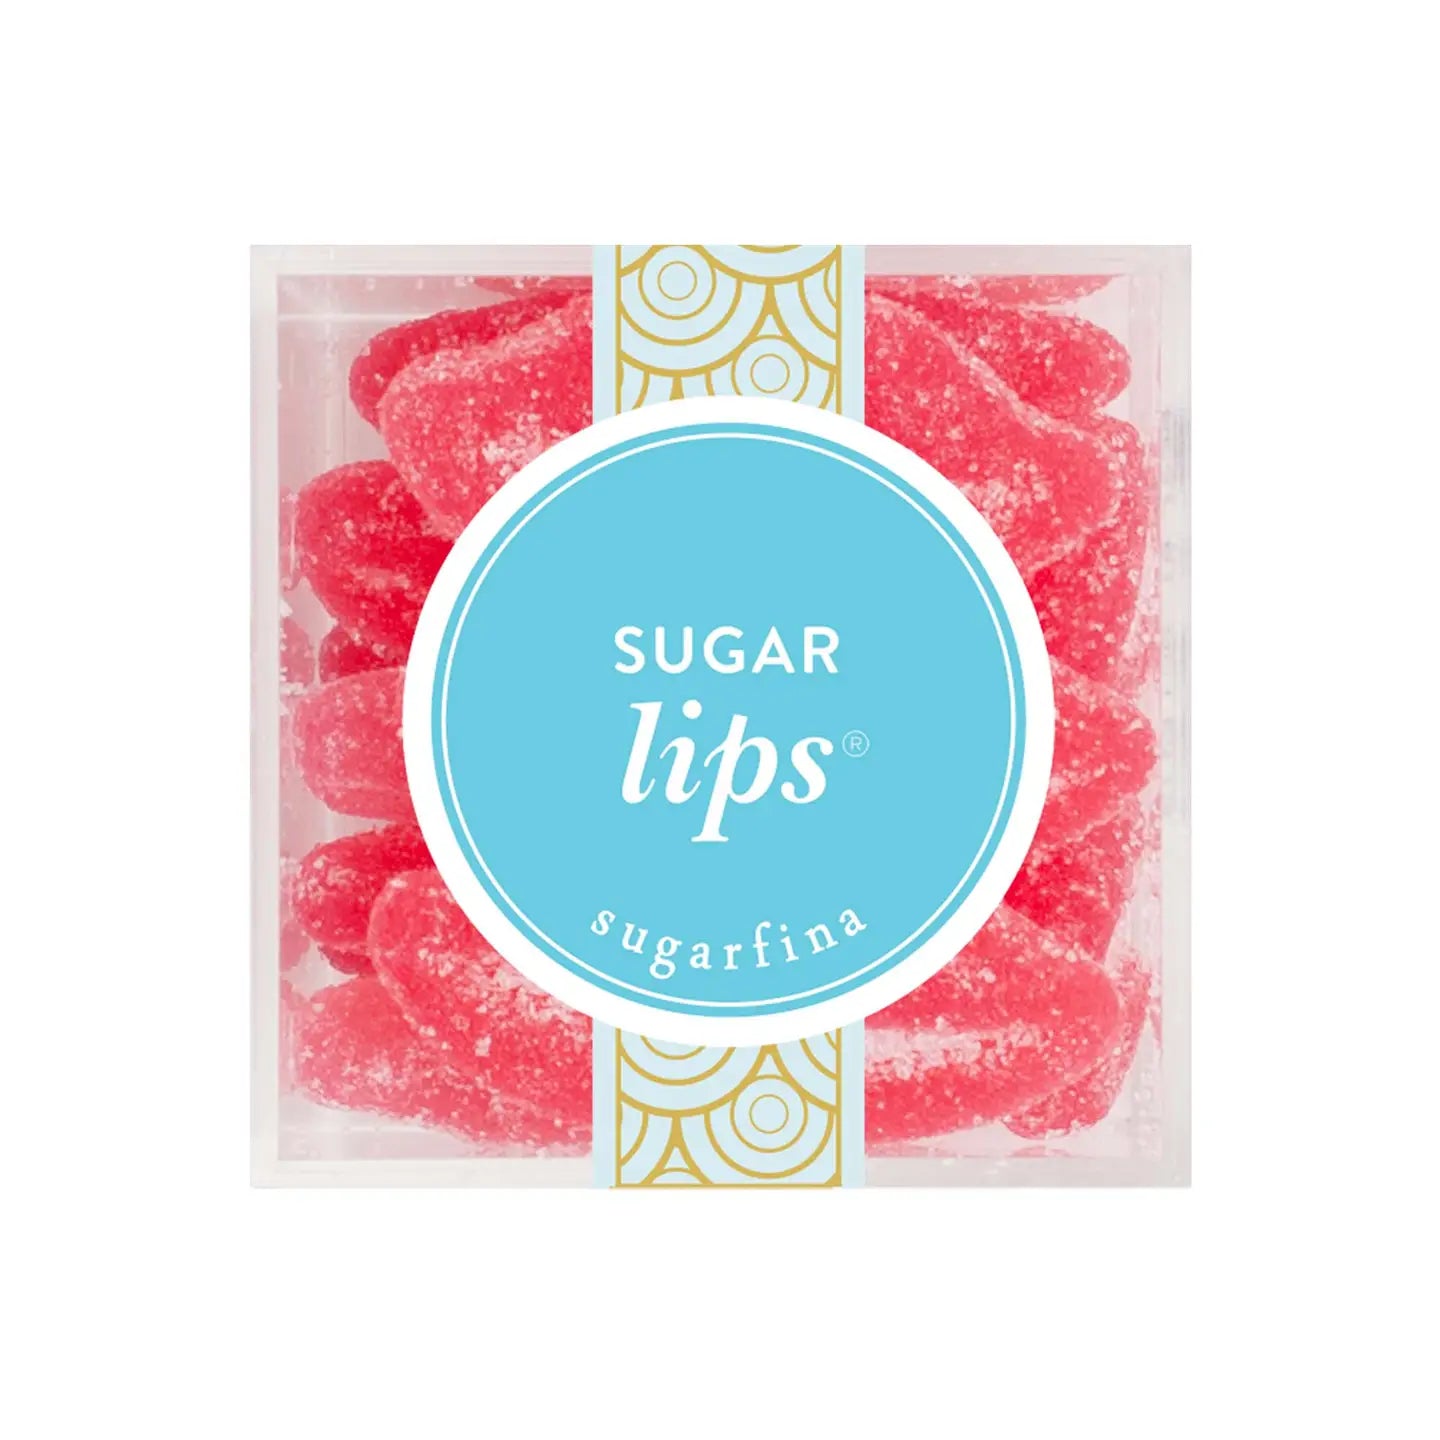 Sugarfina | Sugar Lips (91g)